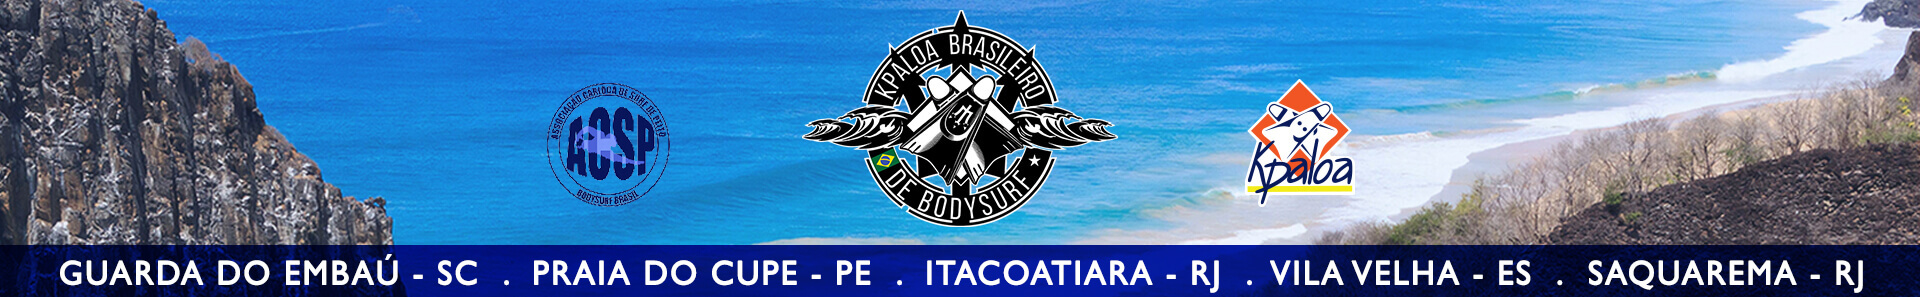 testeira-kpaloa-brasileiro-de-bodysurf